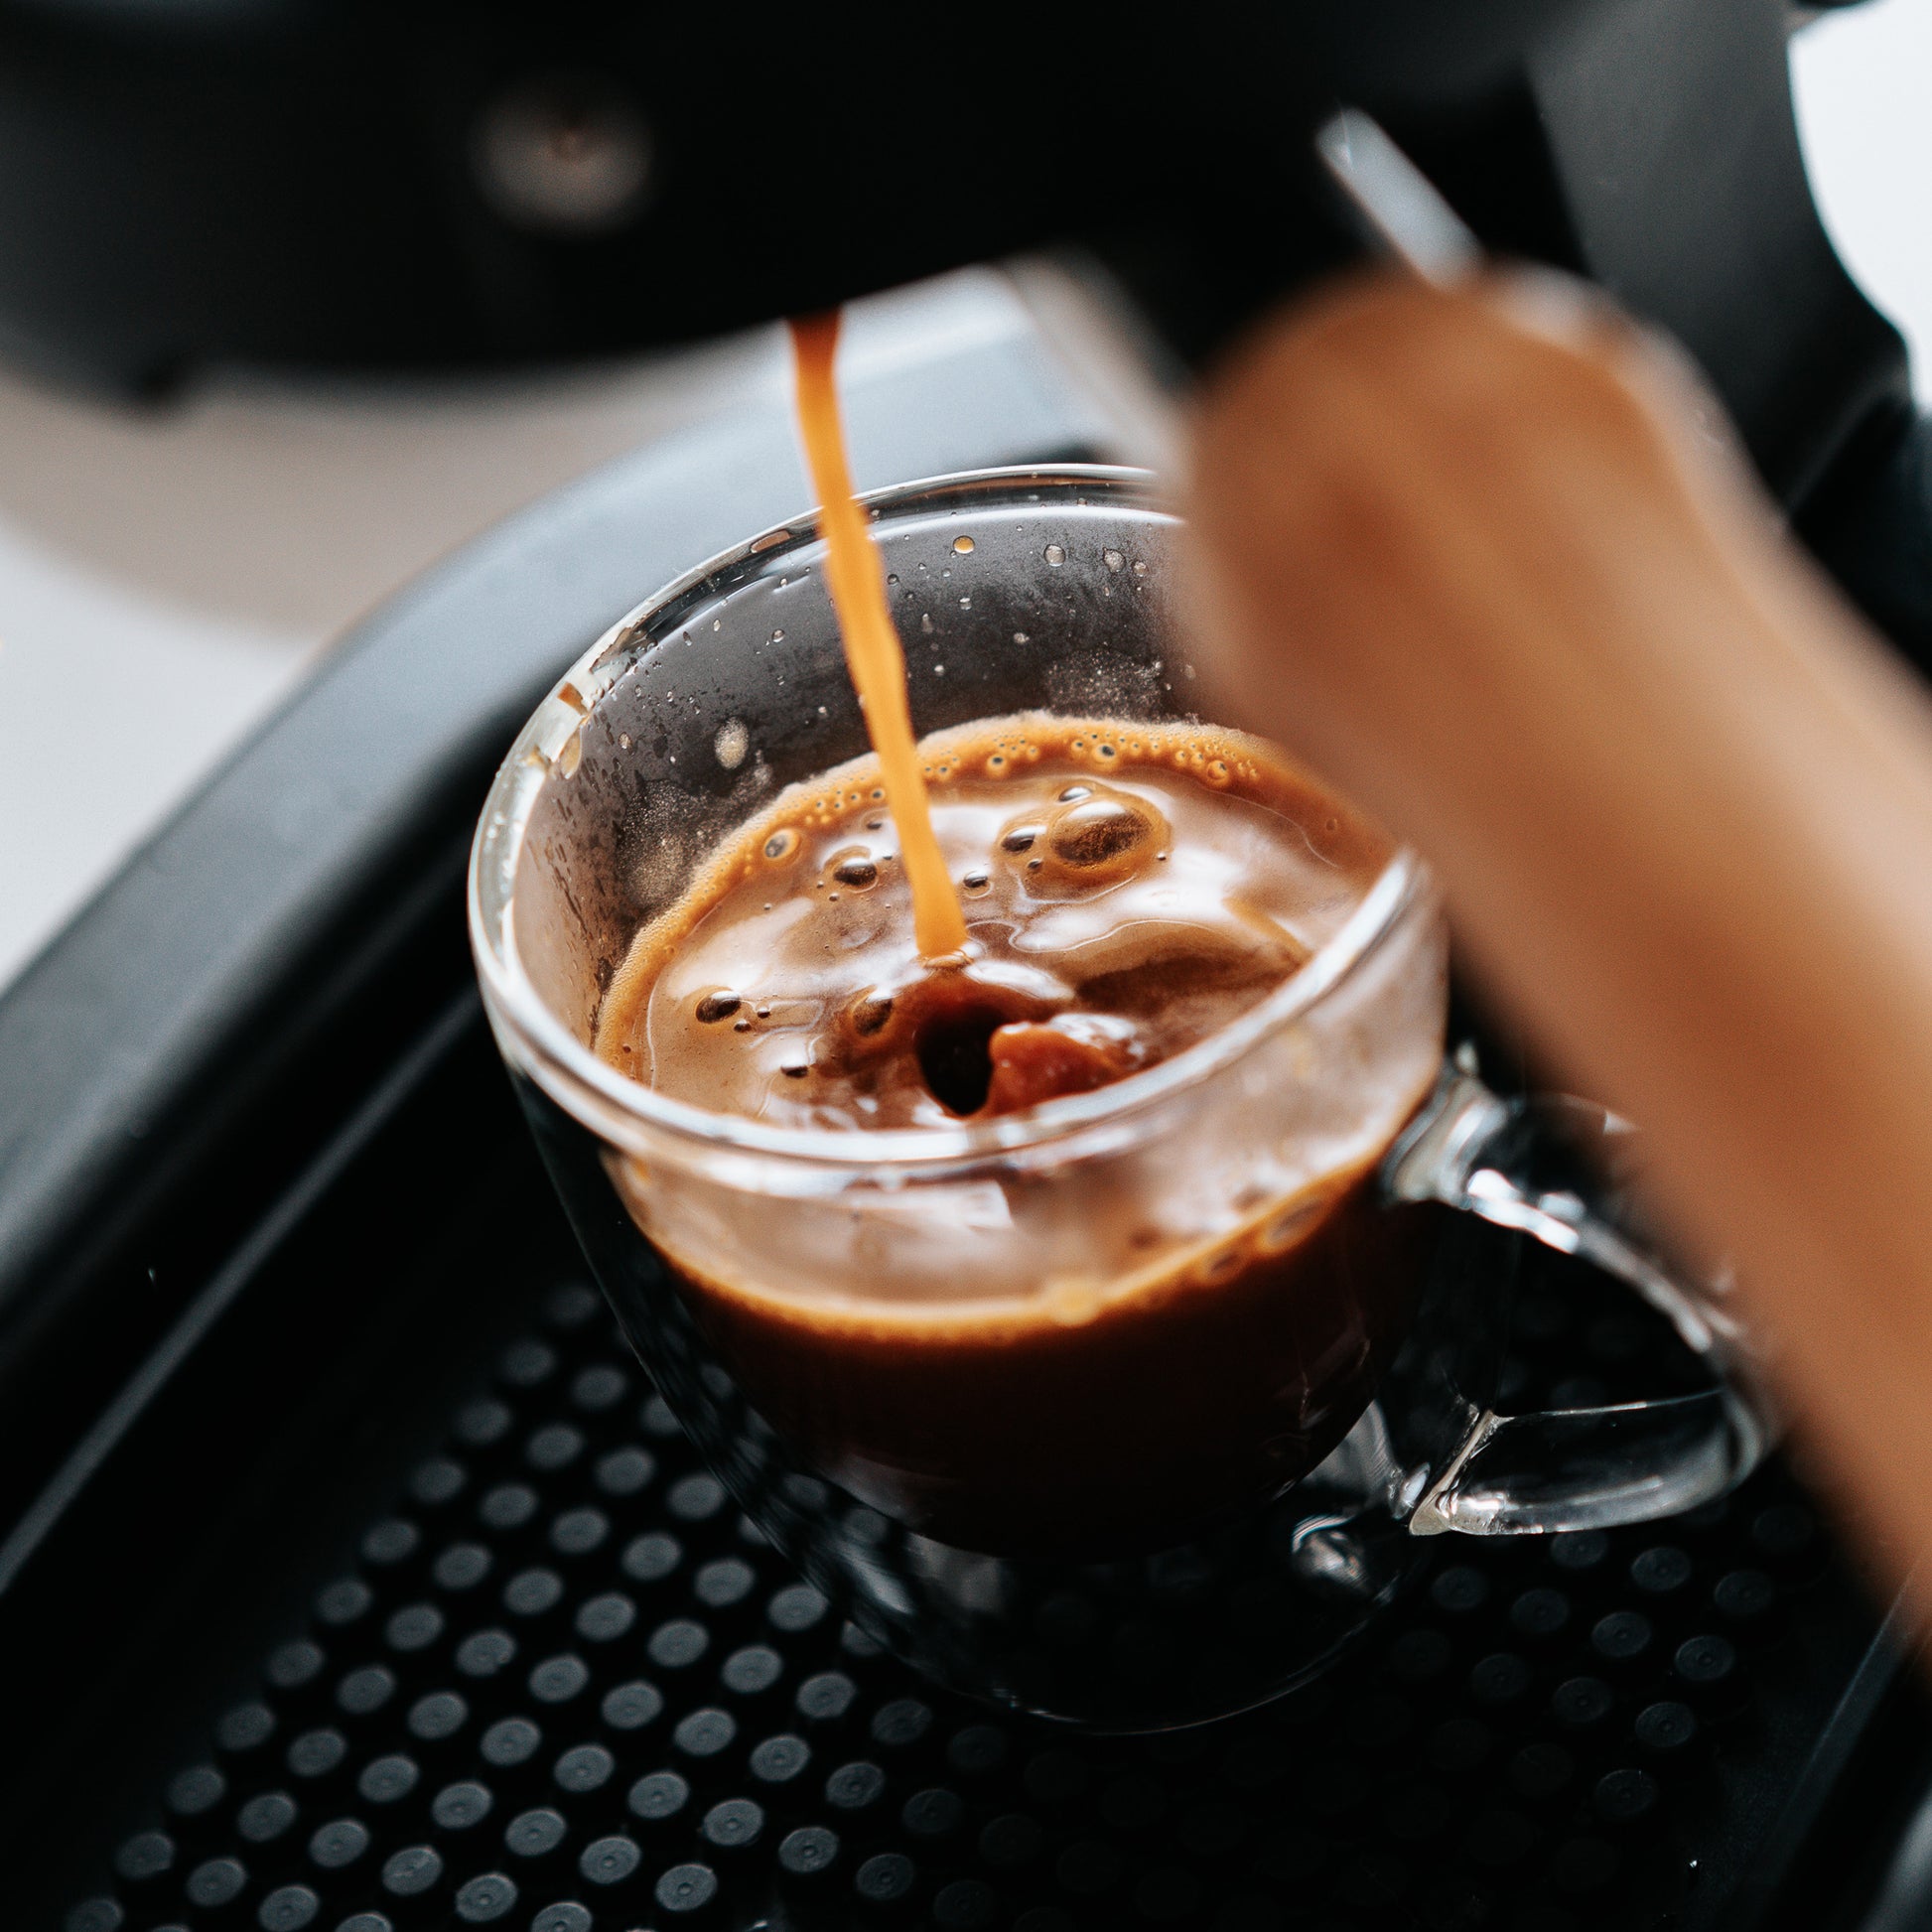 Flair Espresso Flair 58 - Pre Order - Coffee Coaching Club